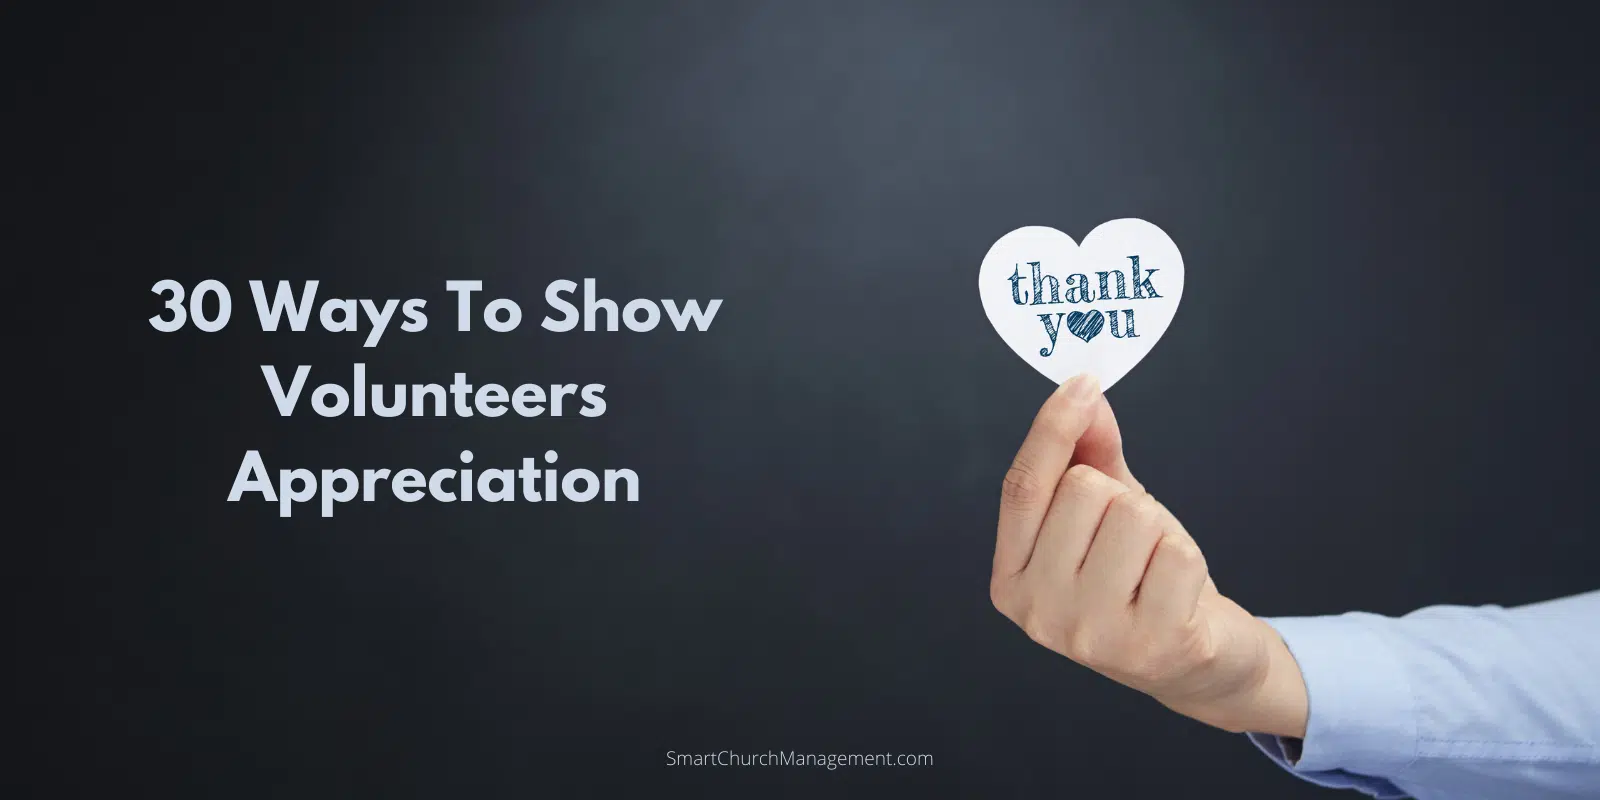 Tips for showing volunteers appreciation